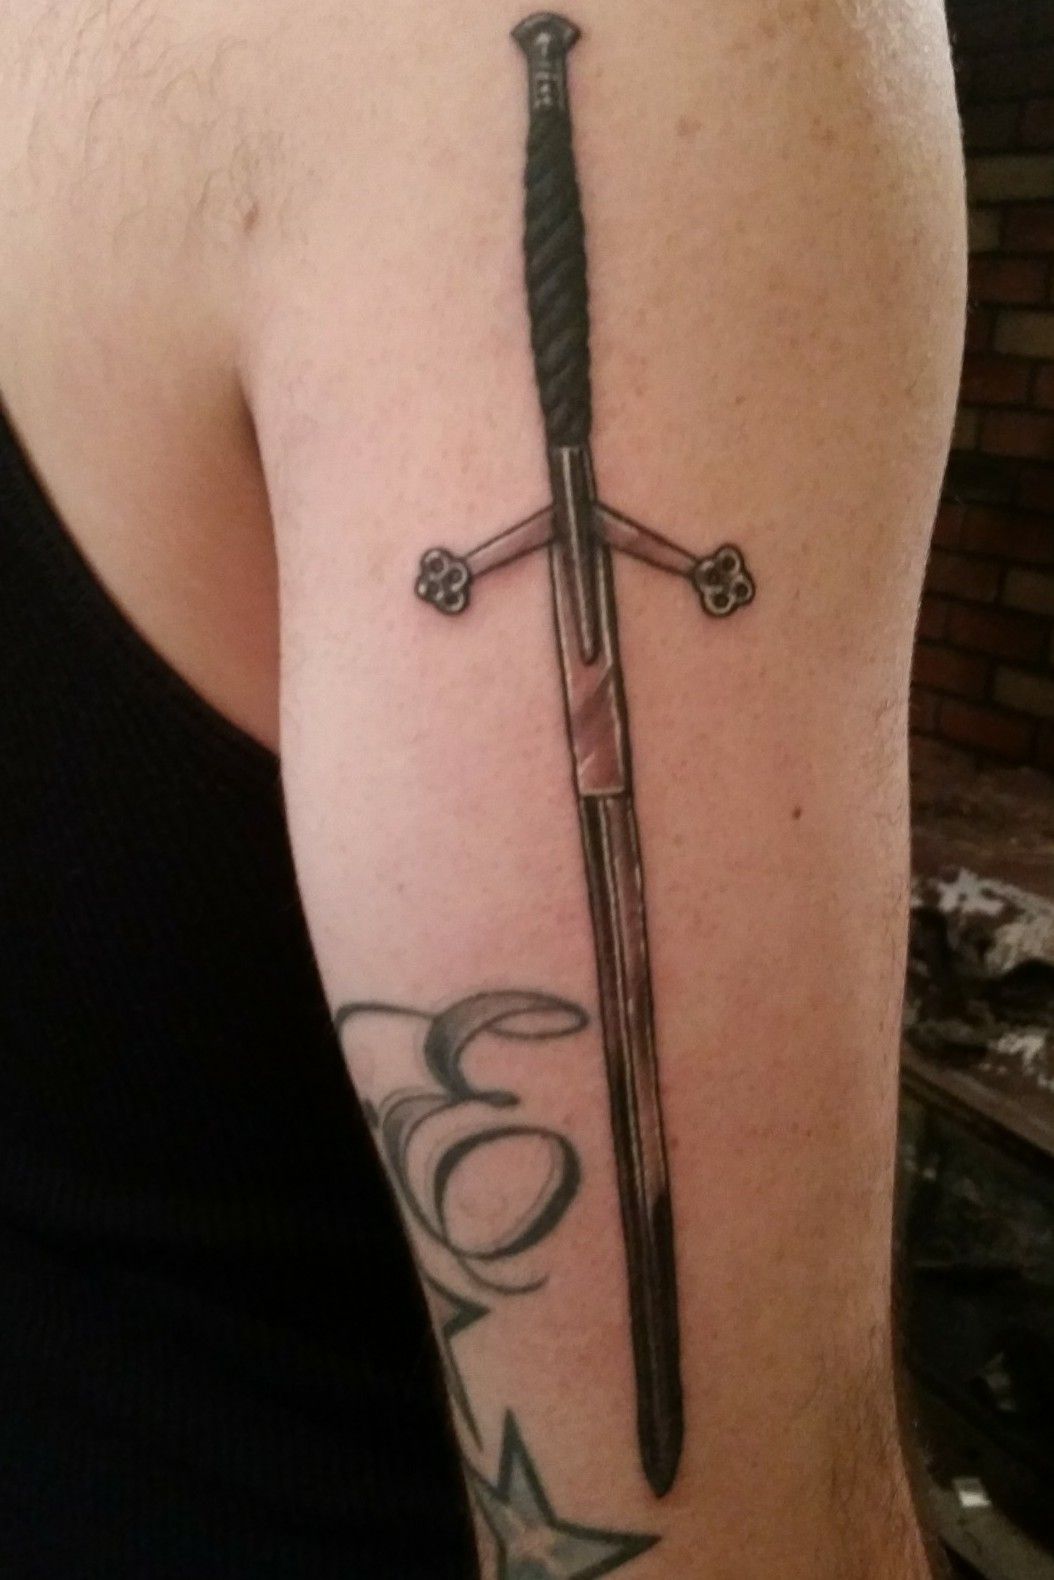 TattooGrid on Twitter Detailed Sword Tattoo by vicink  httpstco4RTfREwEb3 httpstcoihrar3Pwhg  Twitter